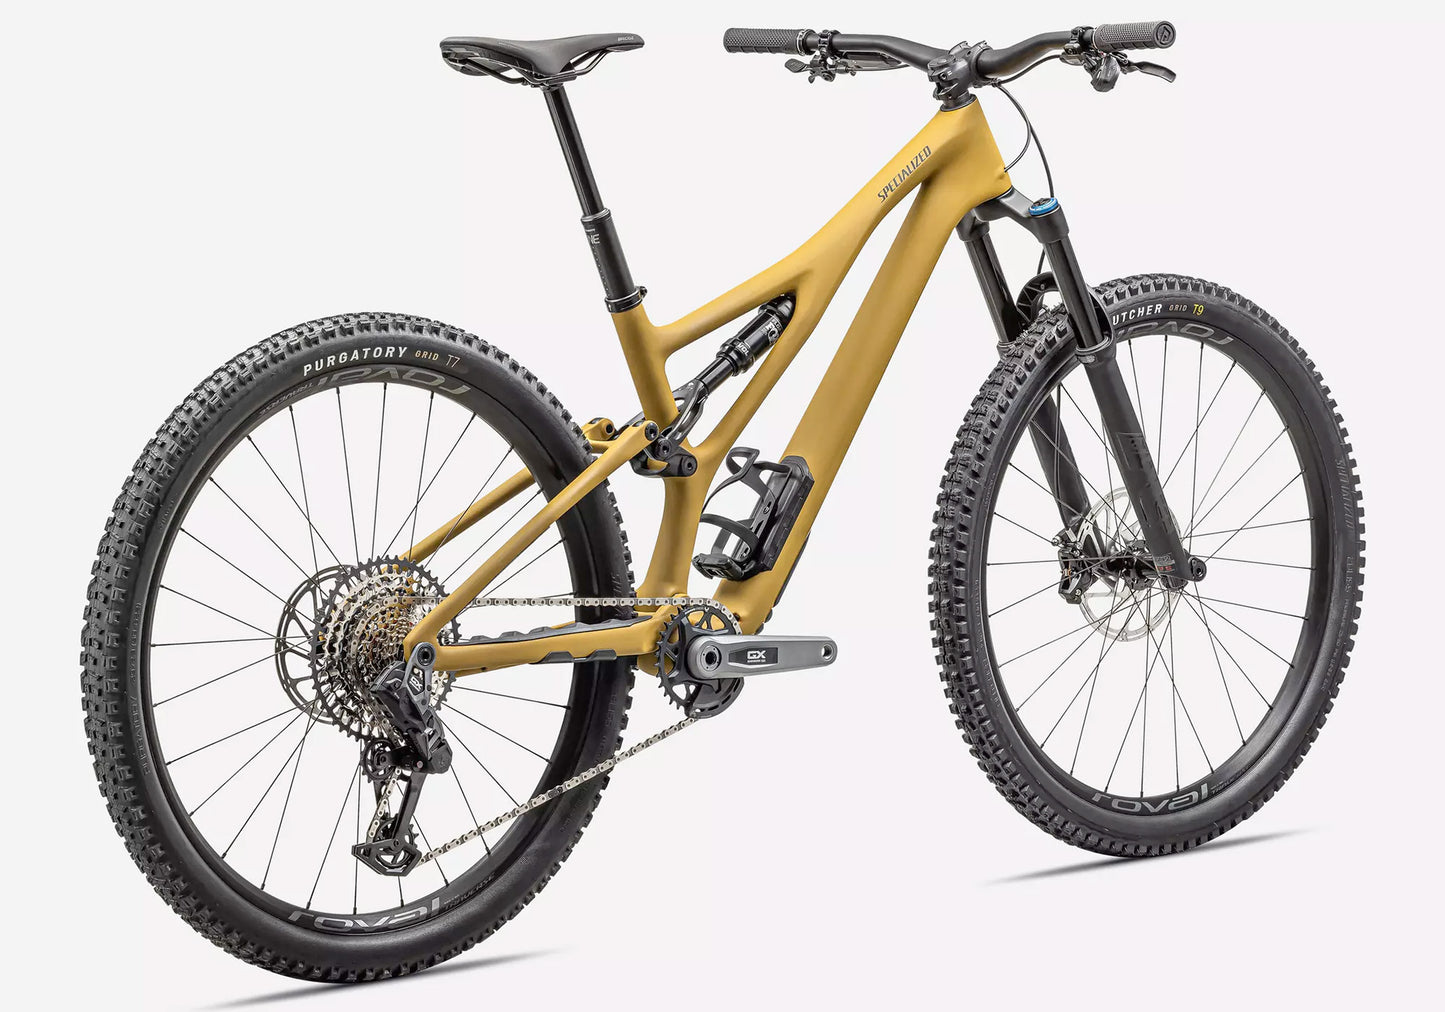 Specialized Stumpjumper Expert T-Type Unisex Mountain Bike - Satin Harvest Gold